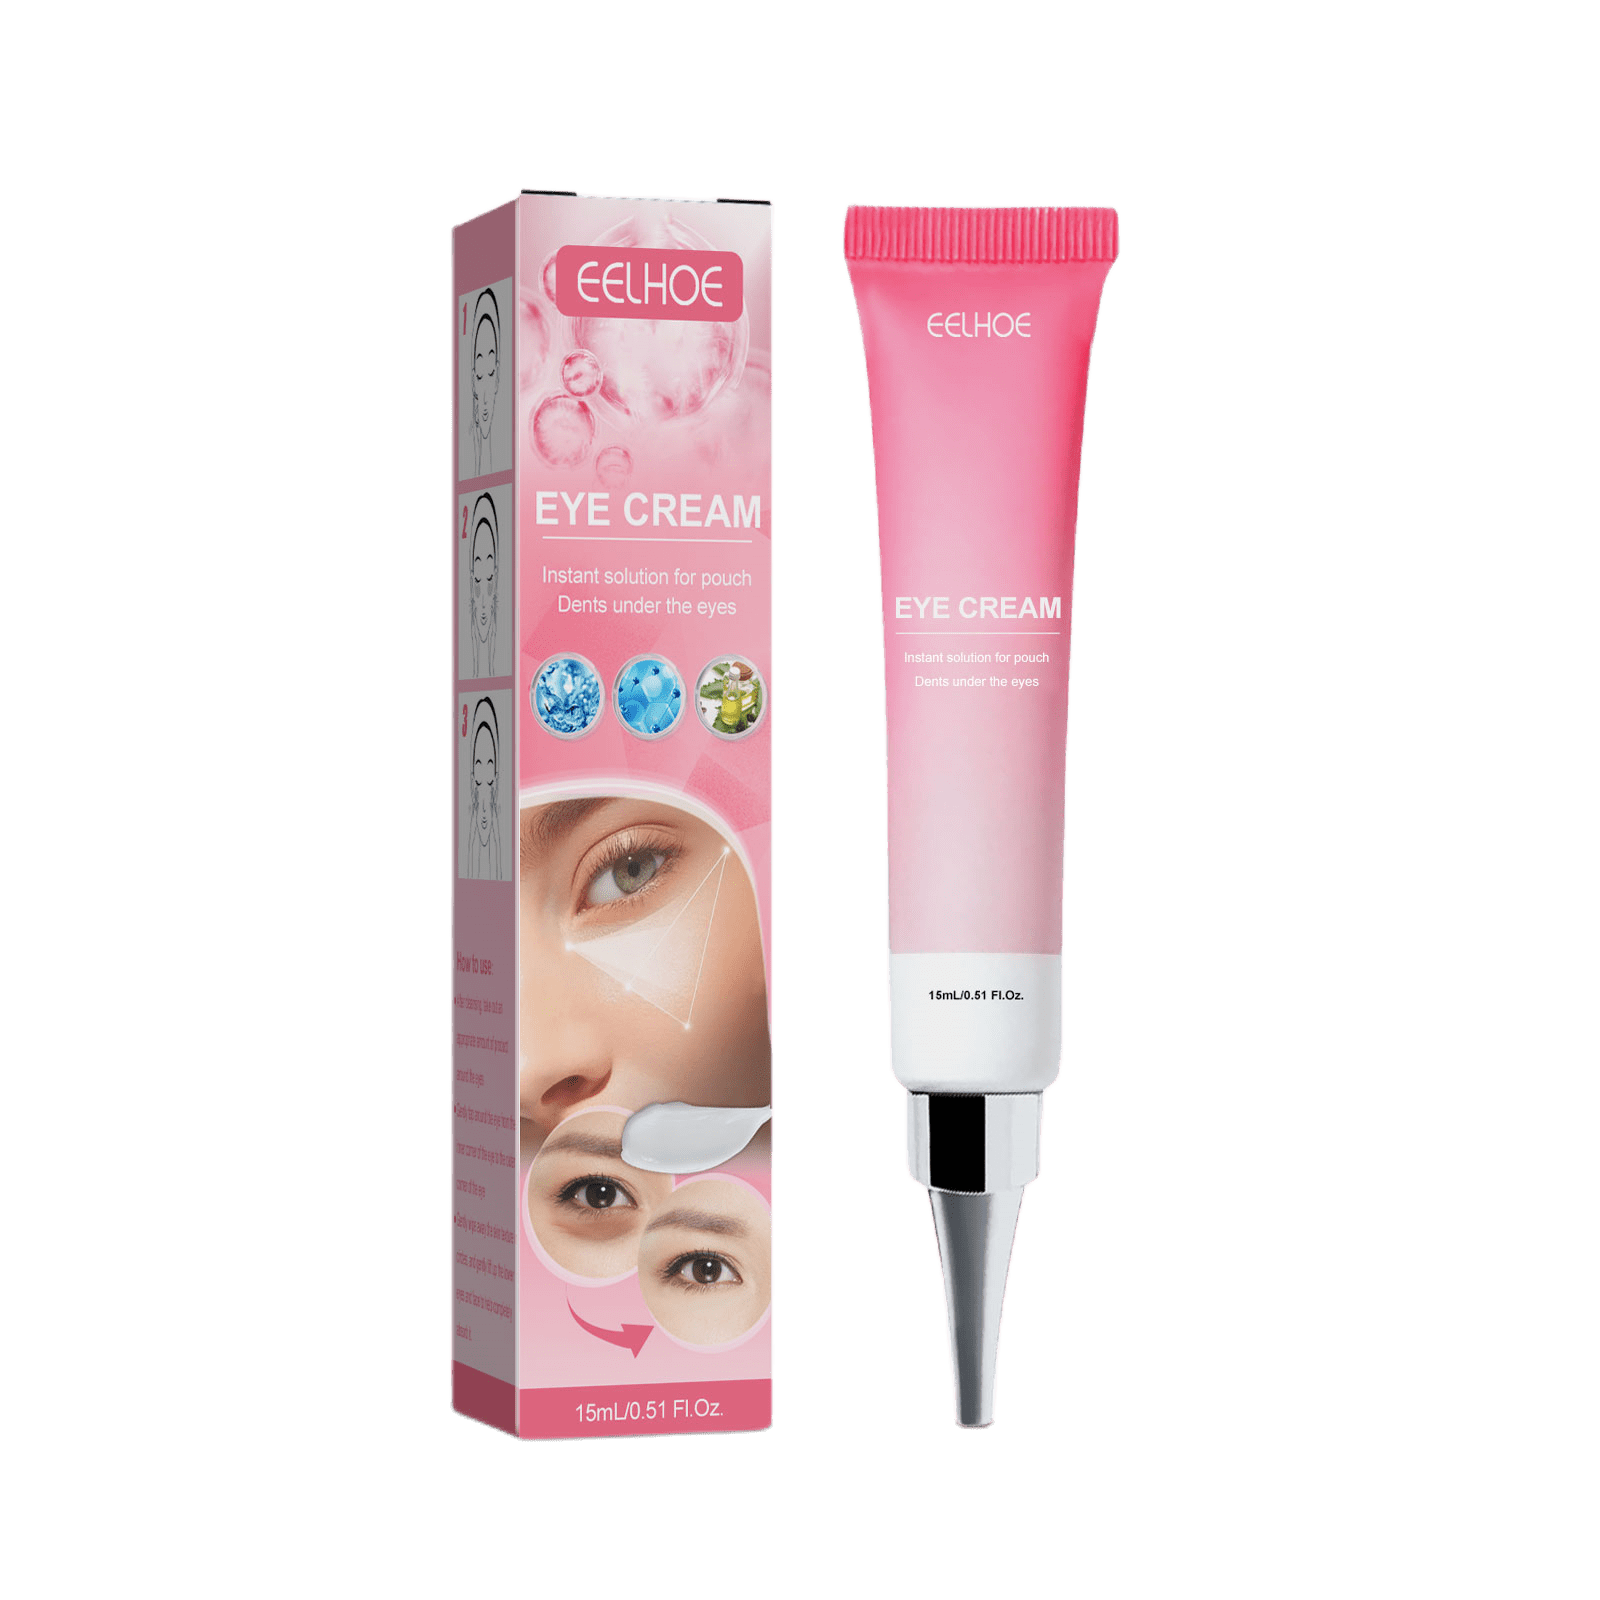 OPENEYES Awaken Peptide Lifting Eye GelMagic EffectHIMSE Awaken Peptide  Depuffing Eye Gel, Lifts Firming Anti-Wrinkle Eye Tightener - Reduces